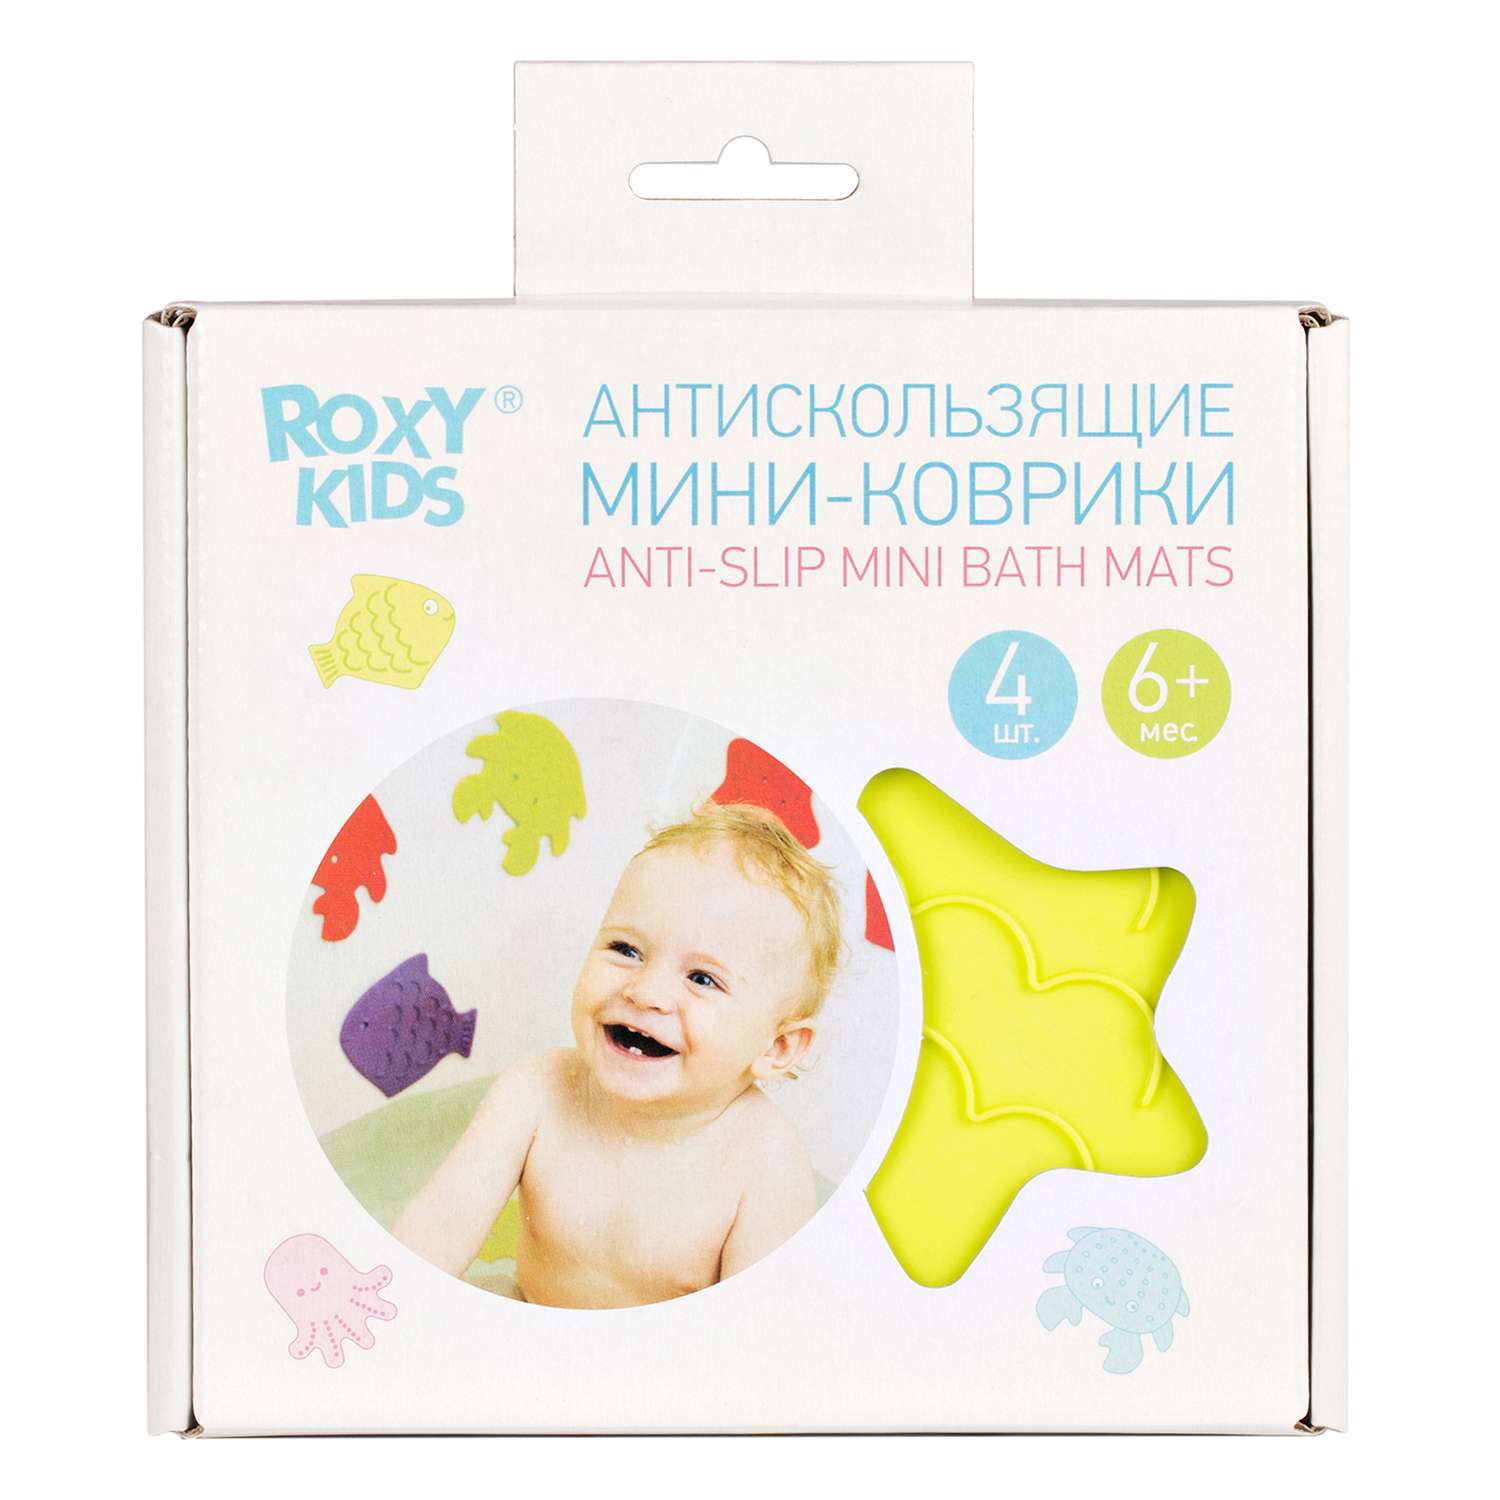 Набор мини-ковриков для ванны ROXY-KIDS 4шт в ассортименте - фото 2